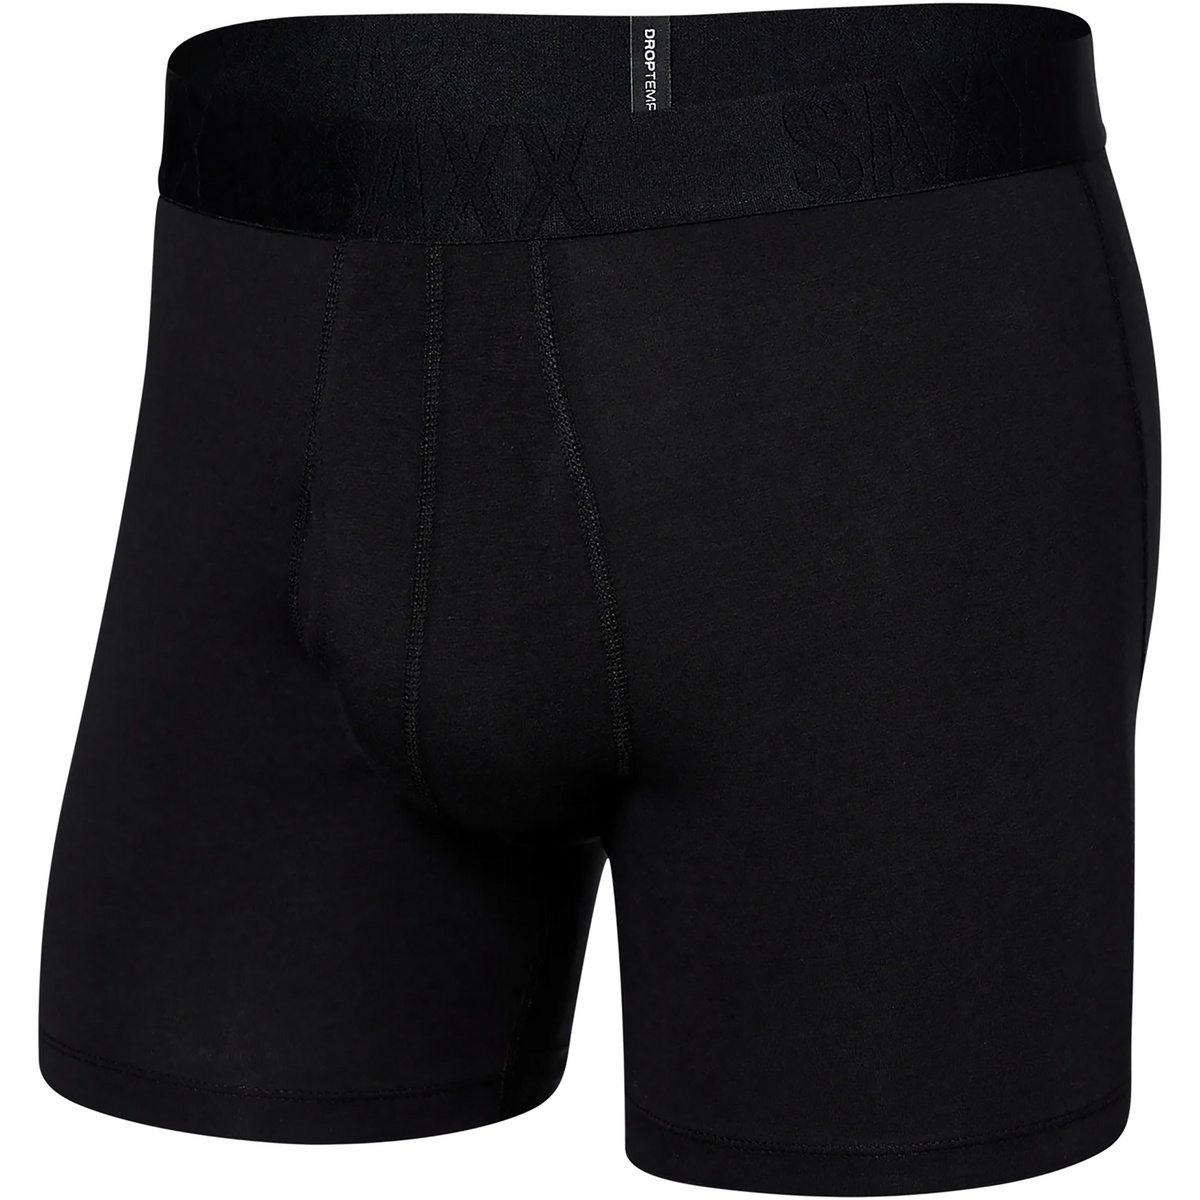 Image of Saxx Underwear Uomo Boxer Droptemp Cooling Cotton